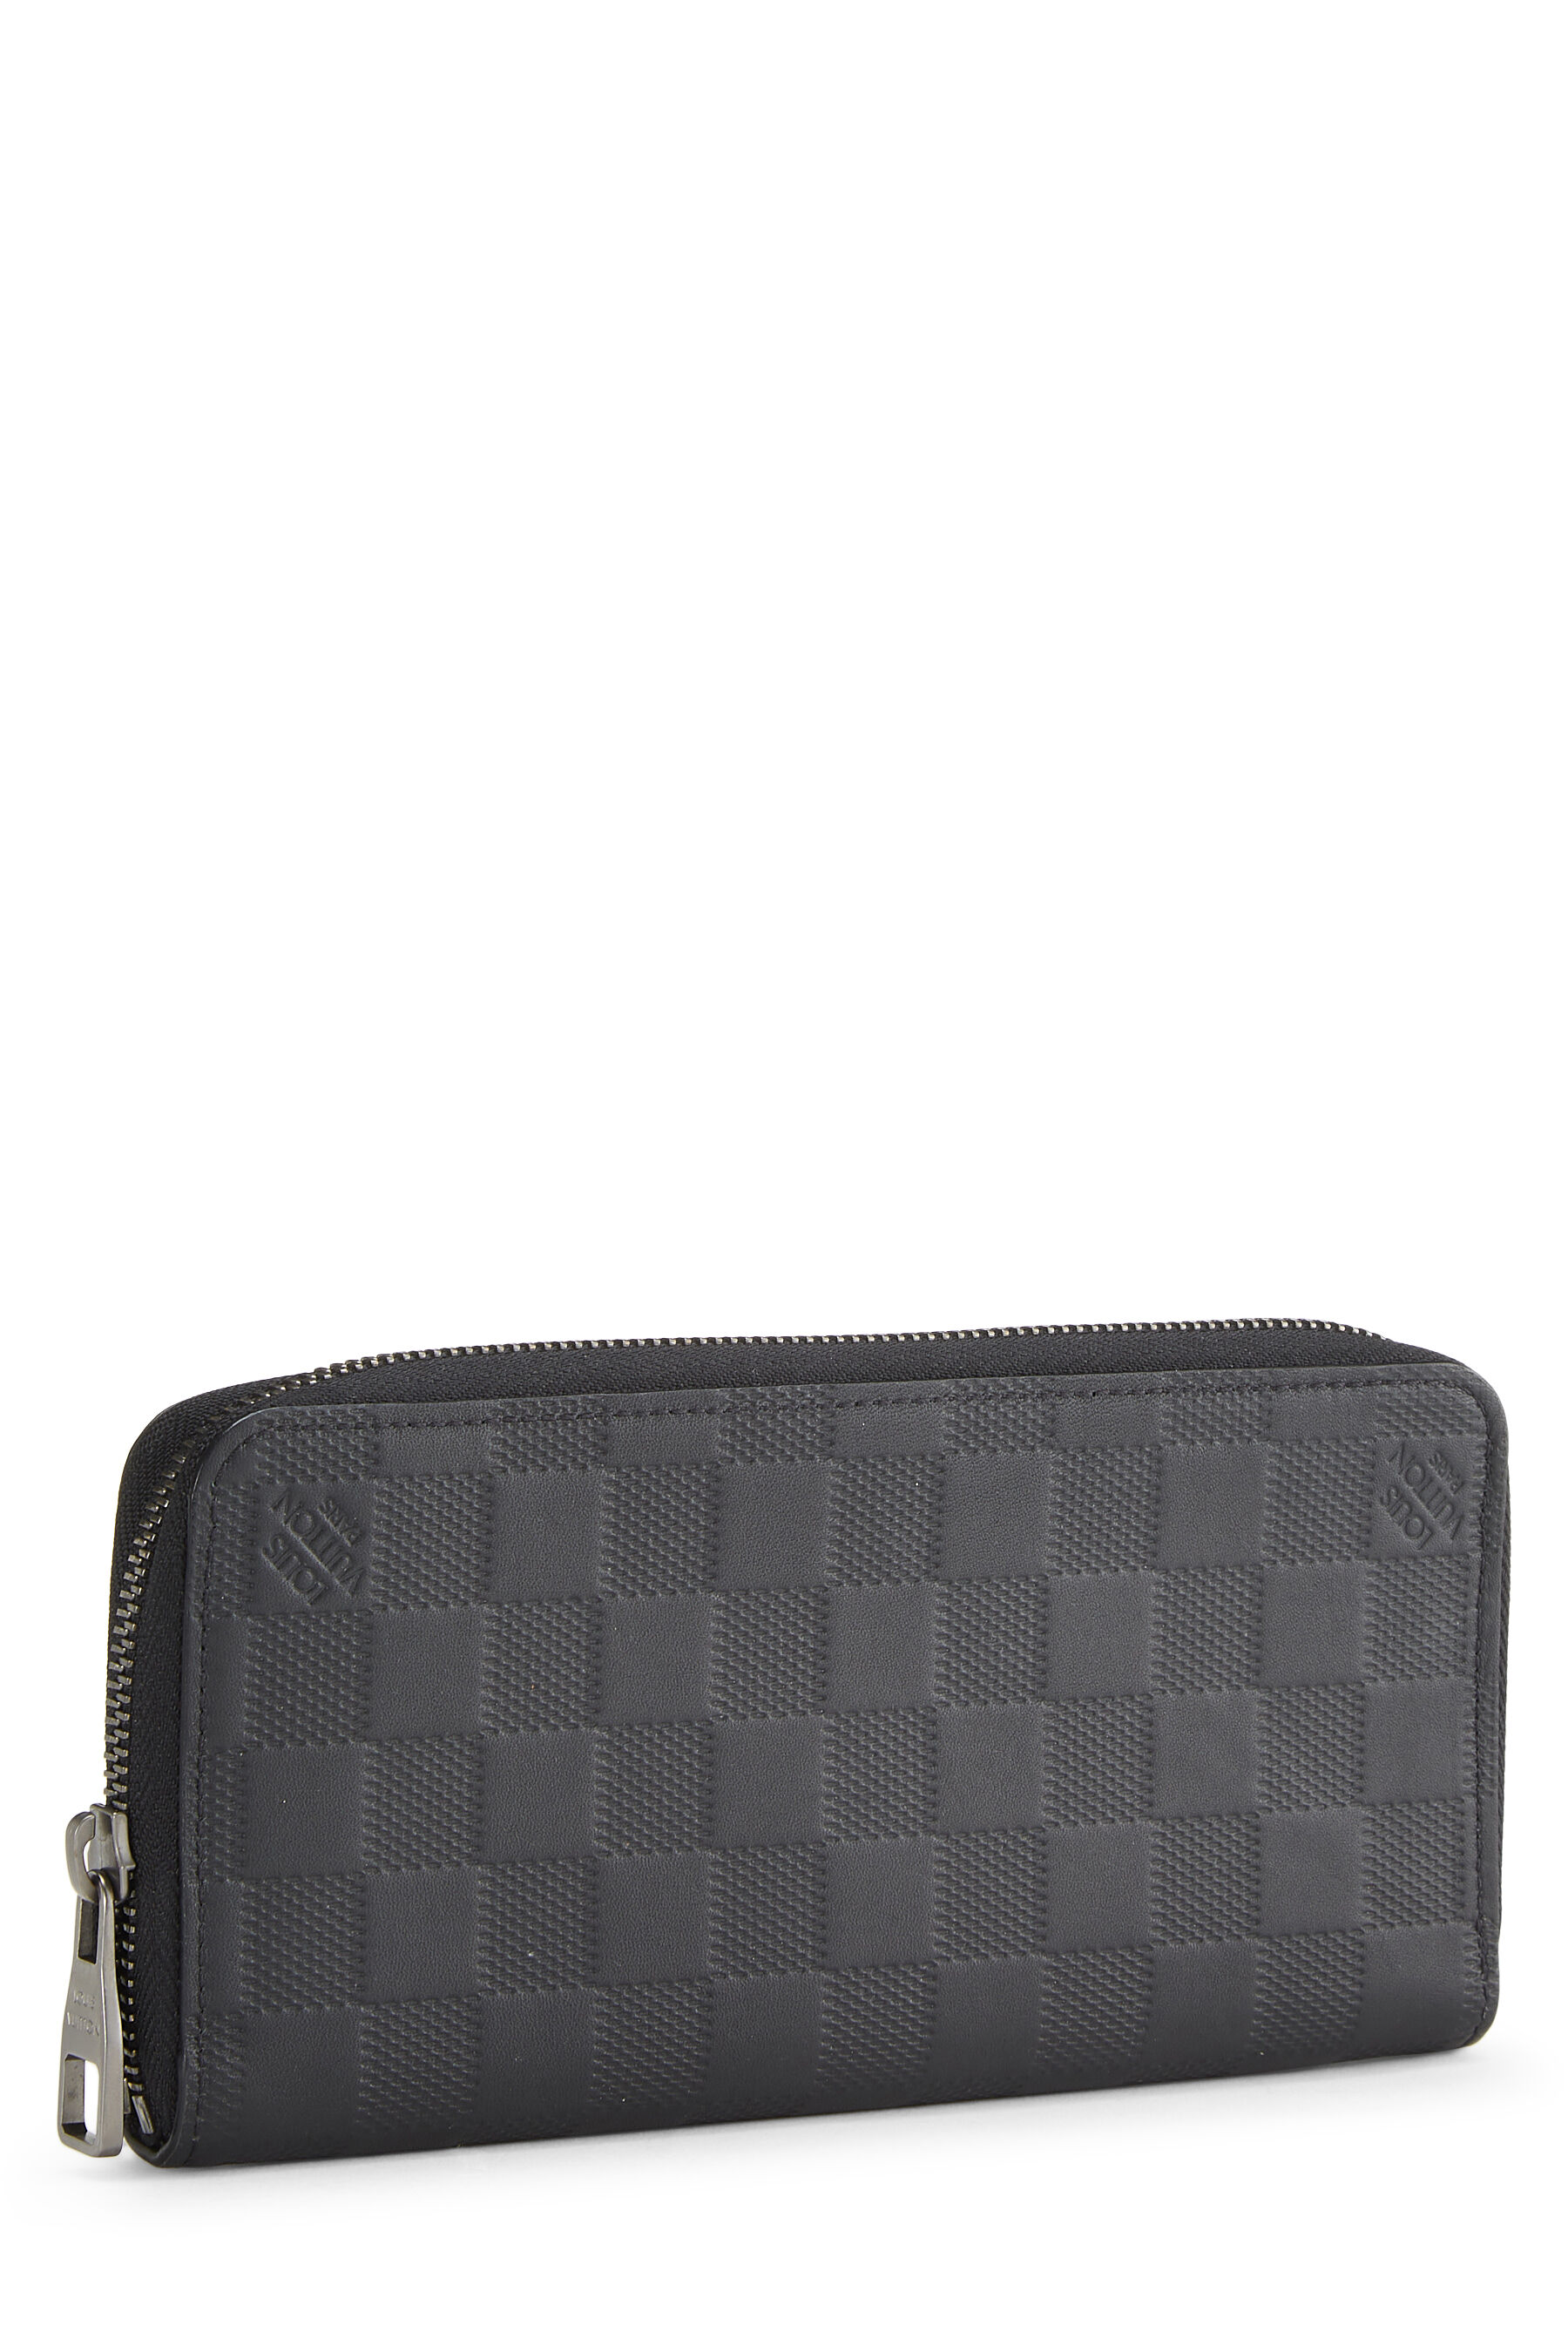 Louis Vuitton Black Damier Infini Zippy Vertical Wallet QJACBDBFKB004